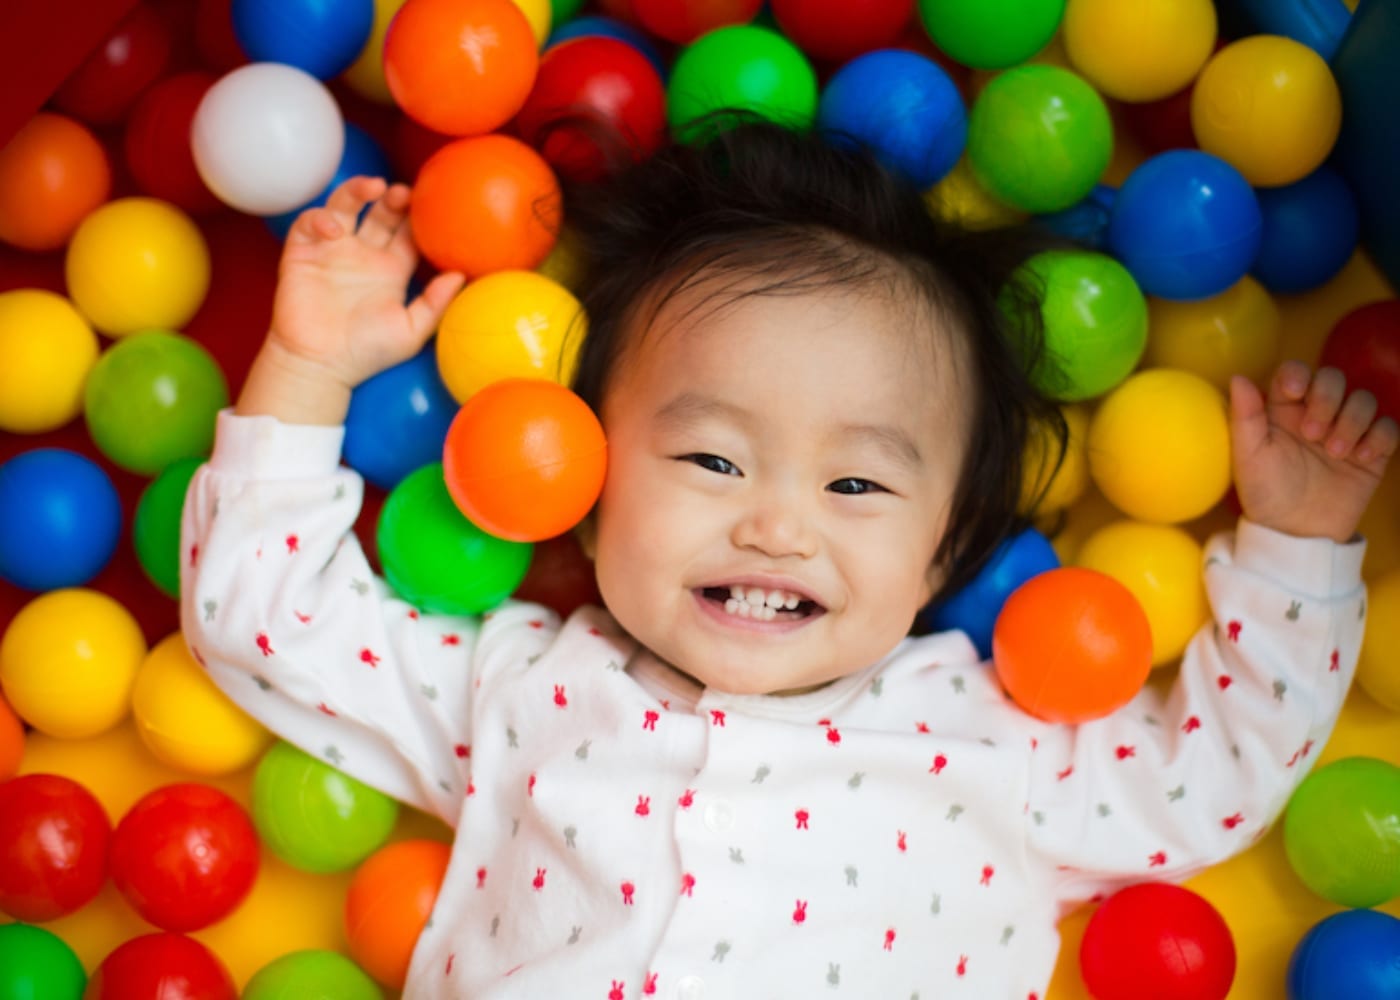  Baby smiling around colorful balls